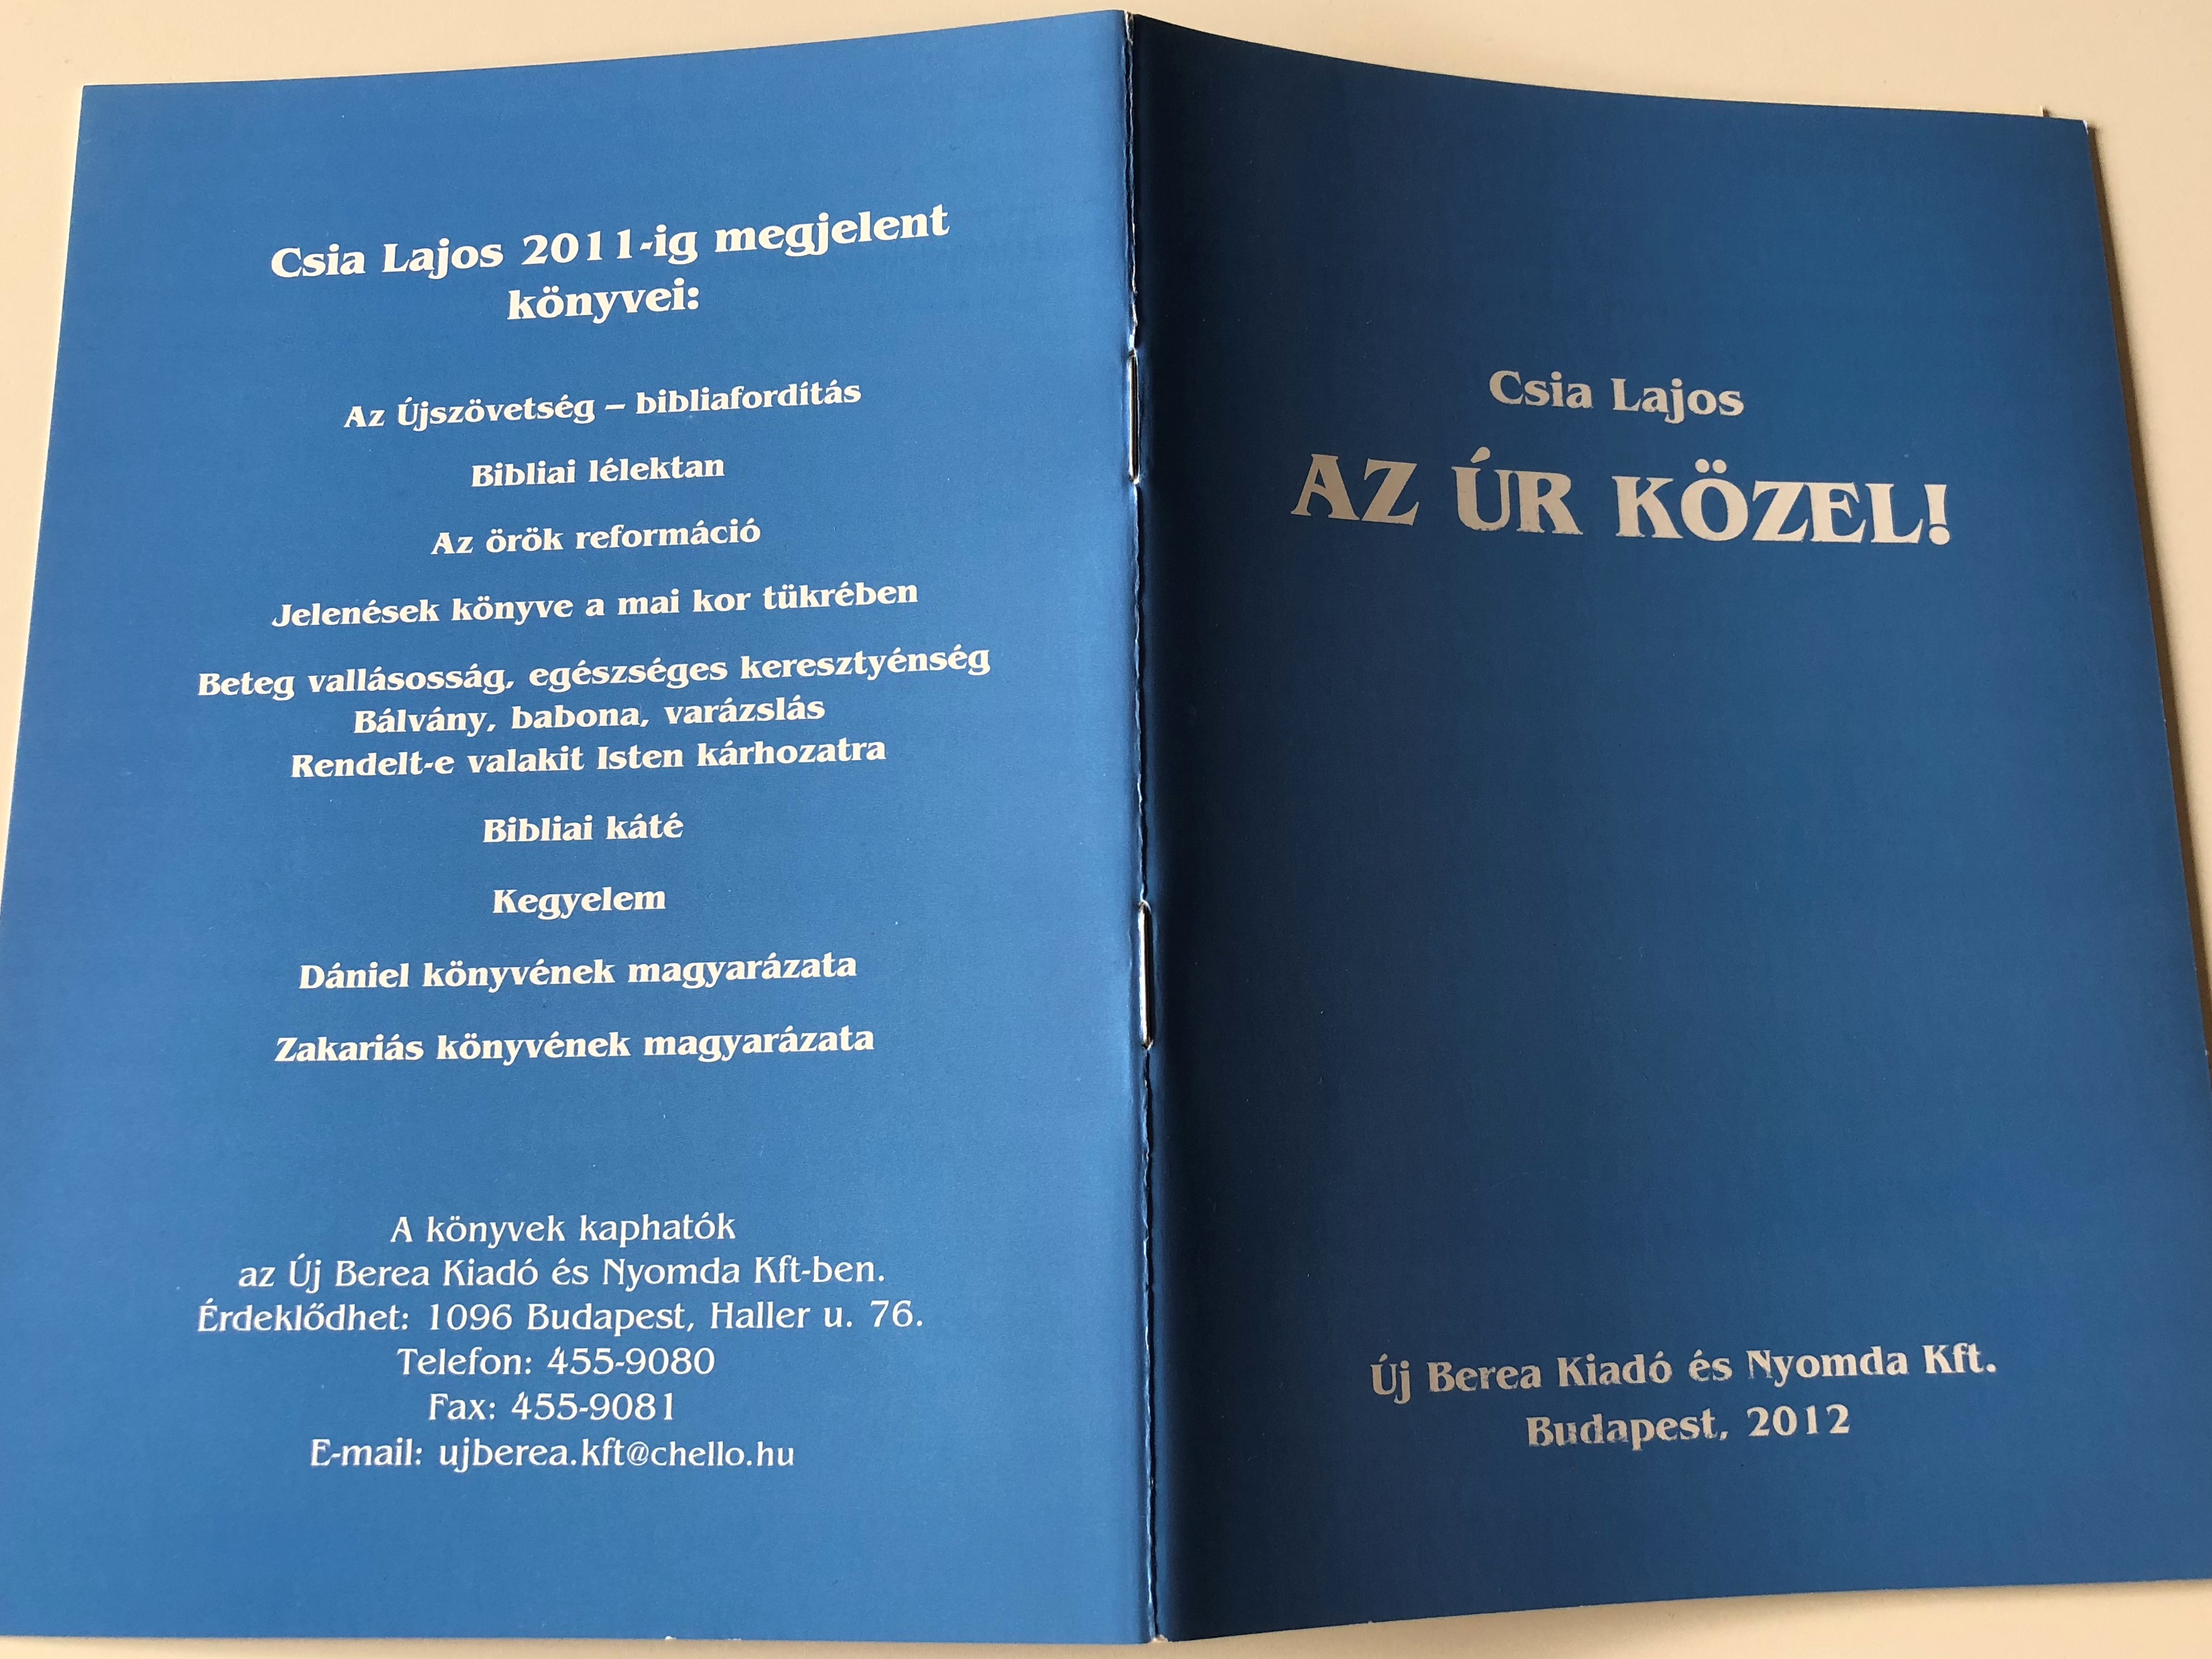 az-r-k-zel-by-csia-lajos-the-lord-is-at-hand-hungarian-language-booklet-j-berea-kiad-2012-7-.jpg